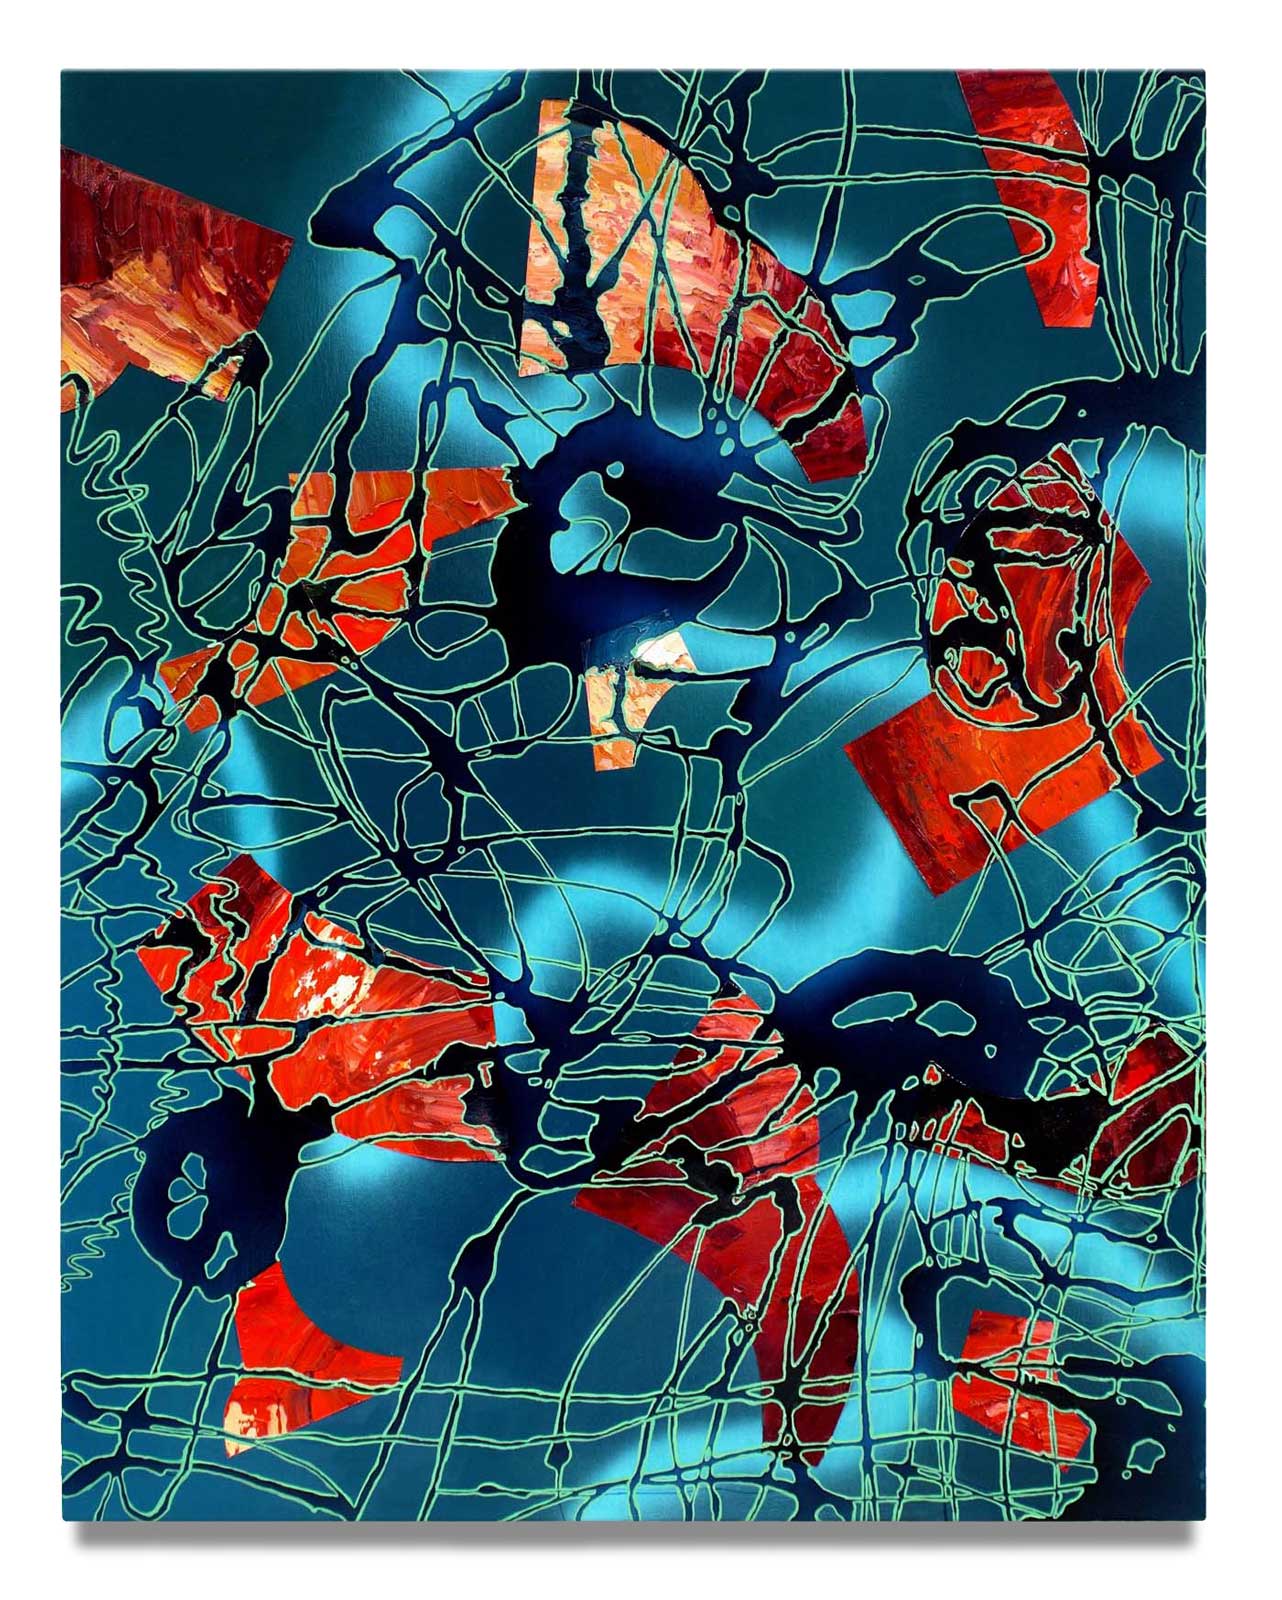 Loose Net - Oil on Canvas - 142.24 cm x 111.76 cm.